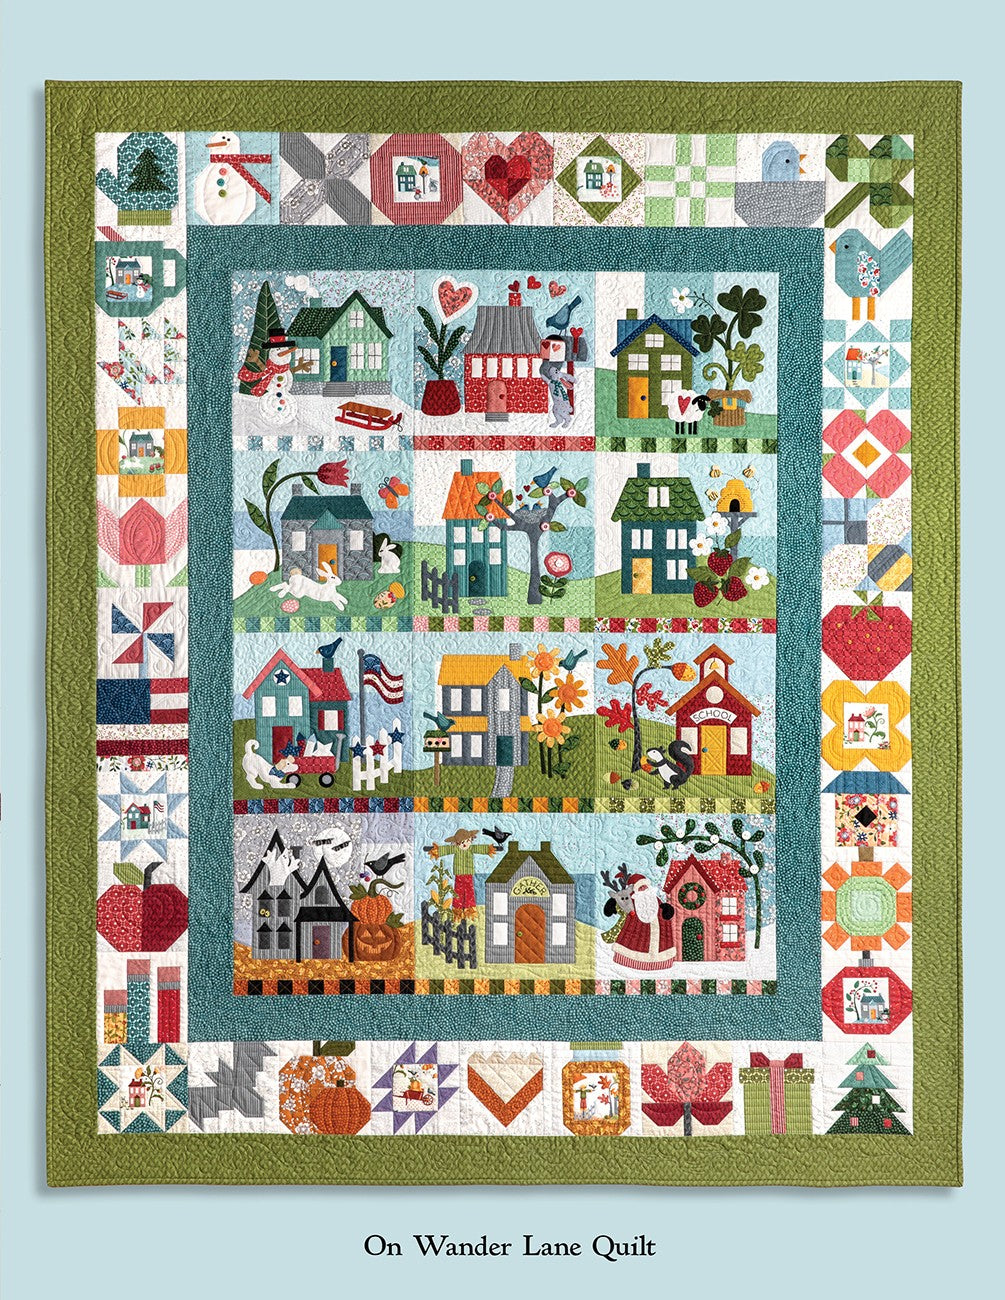 Loveland Cottage on Wander Lane Quilt Pattern (February - Block 2 ) by Nancy Halvorsen of Art to Heart